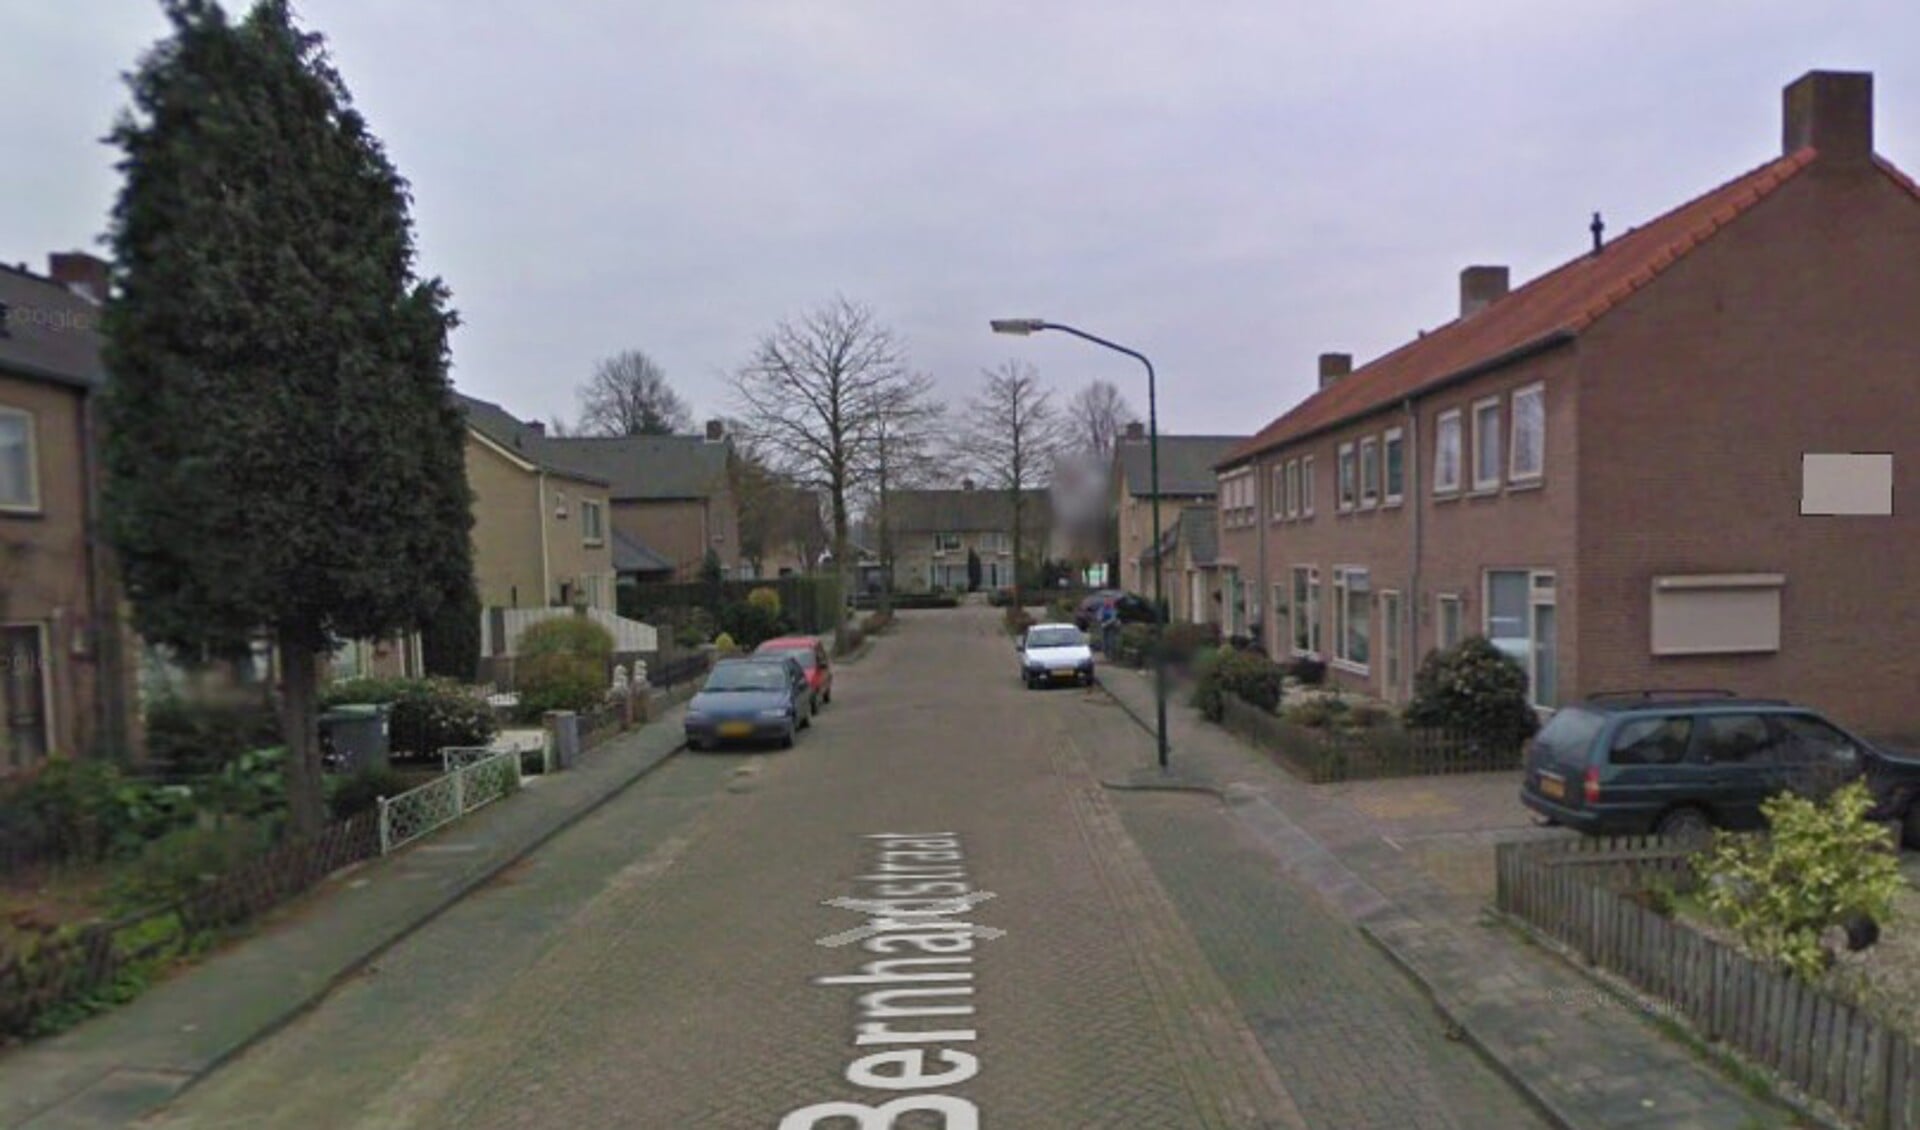 Bernhardstraat in Berghem. (Foto: Google Maps)